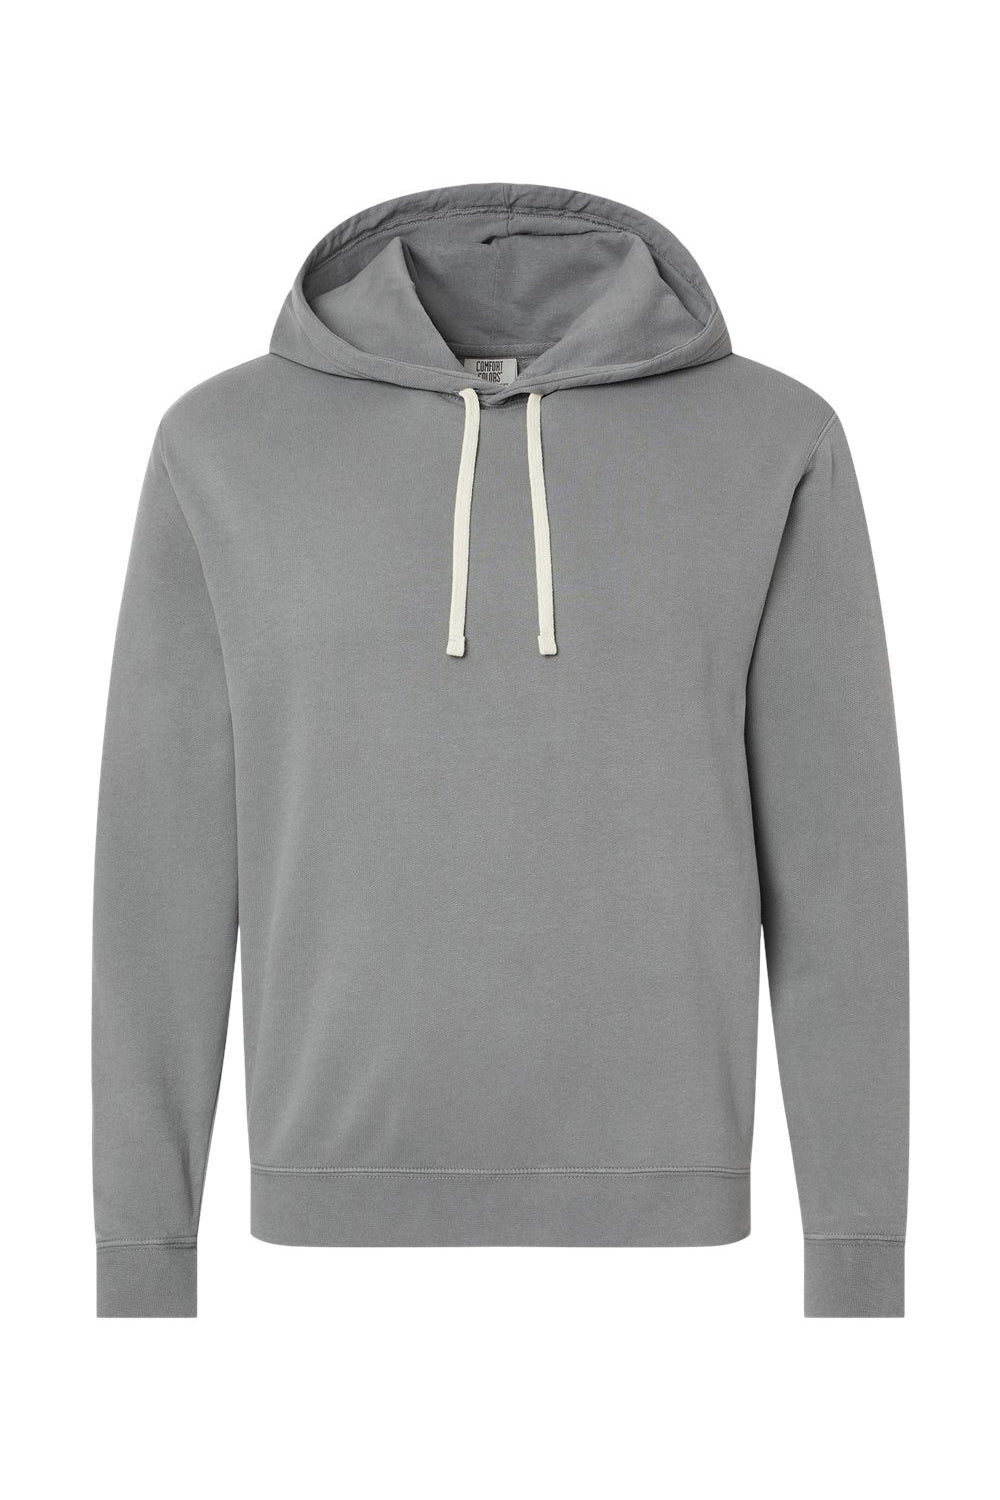 Comfort Colors 1467 Mens Garment Dyed Fleece Hooded Sweatshirt Hoodie Grey Flat Front